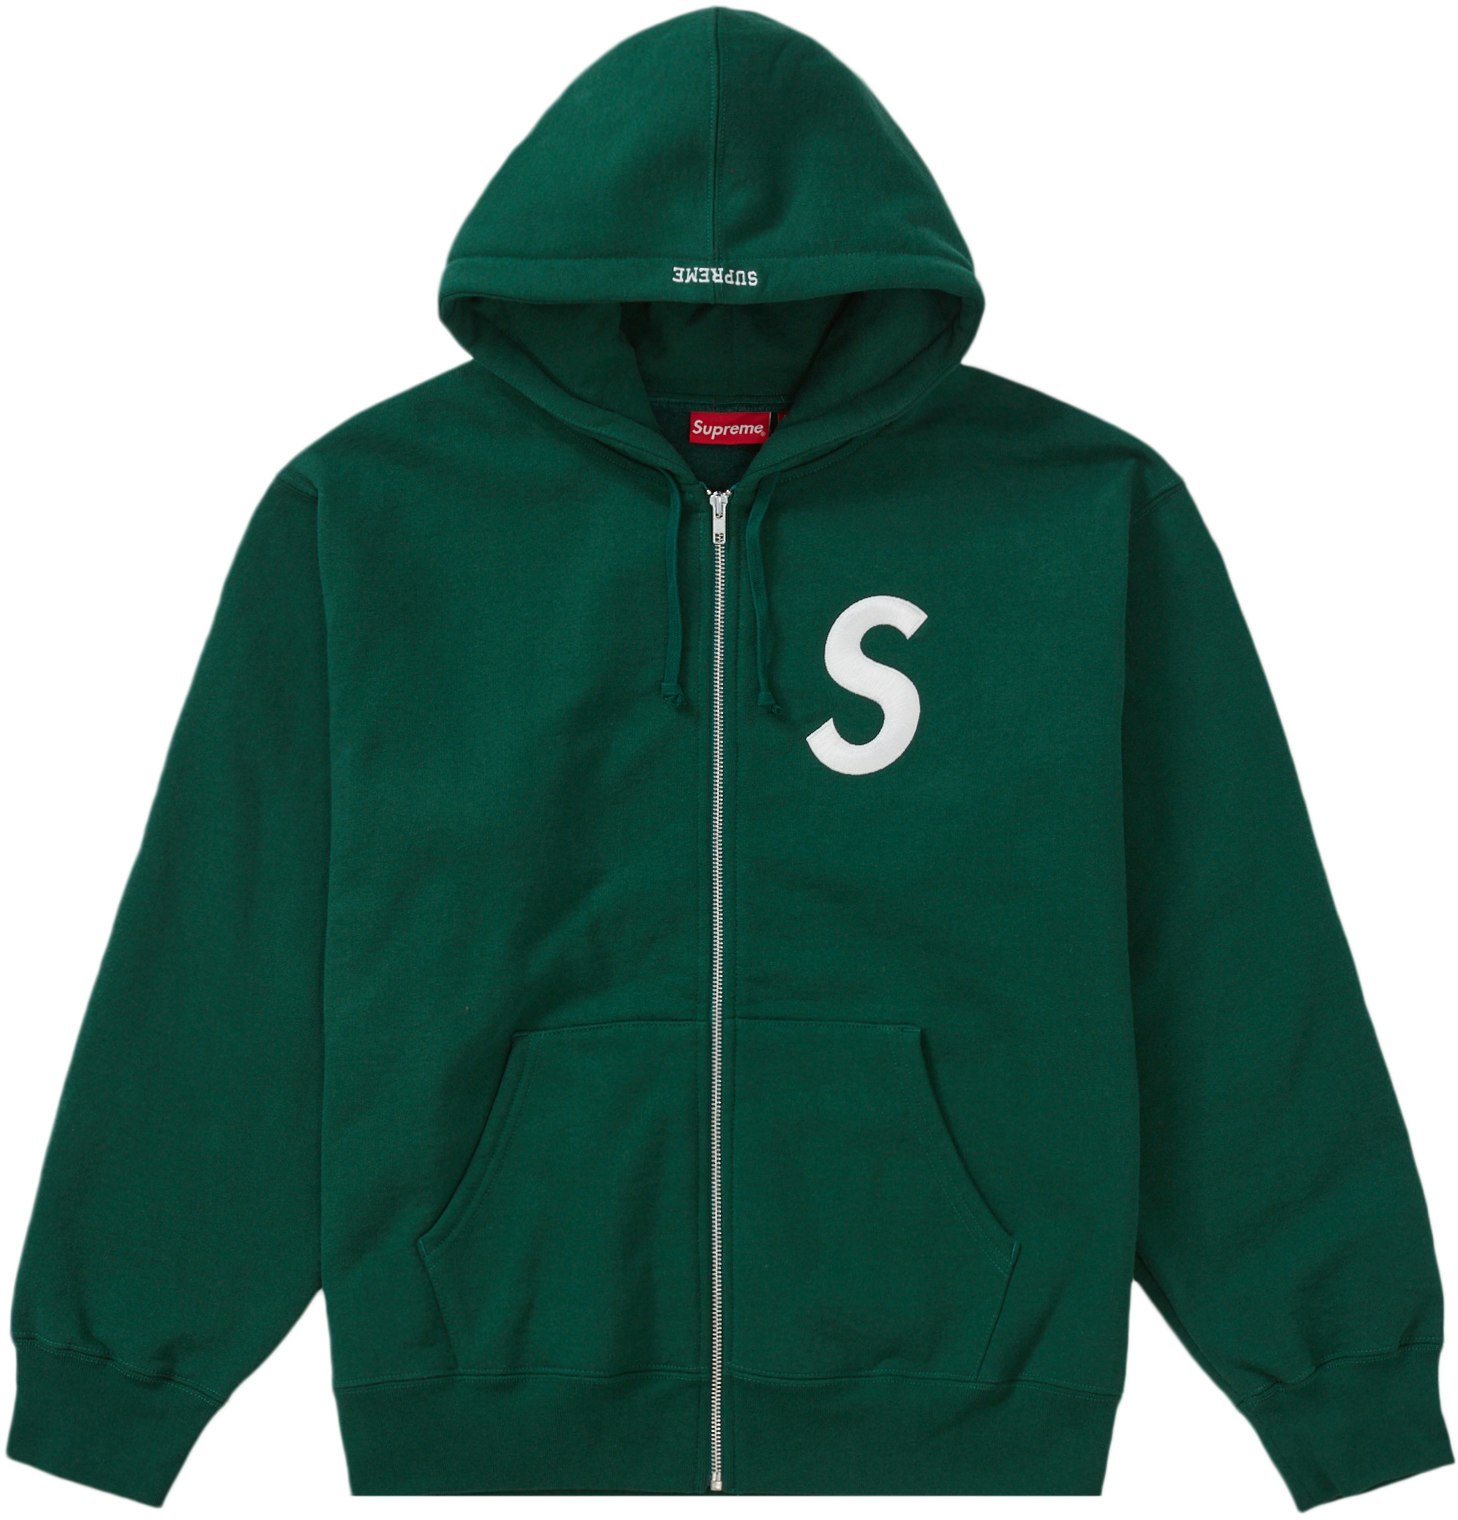 Supreme S Logo Zip Up Hooded Sweatshirt Dark Green - Novelship